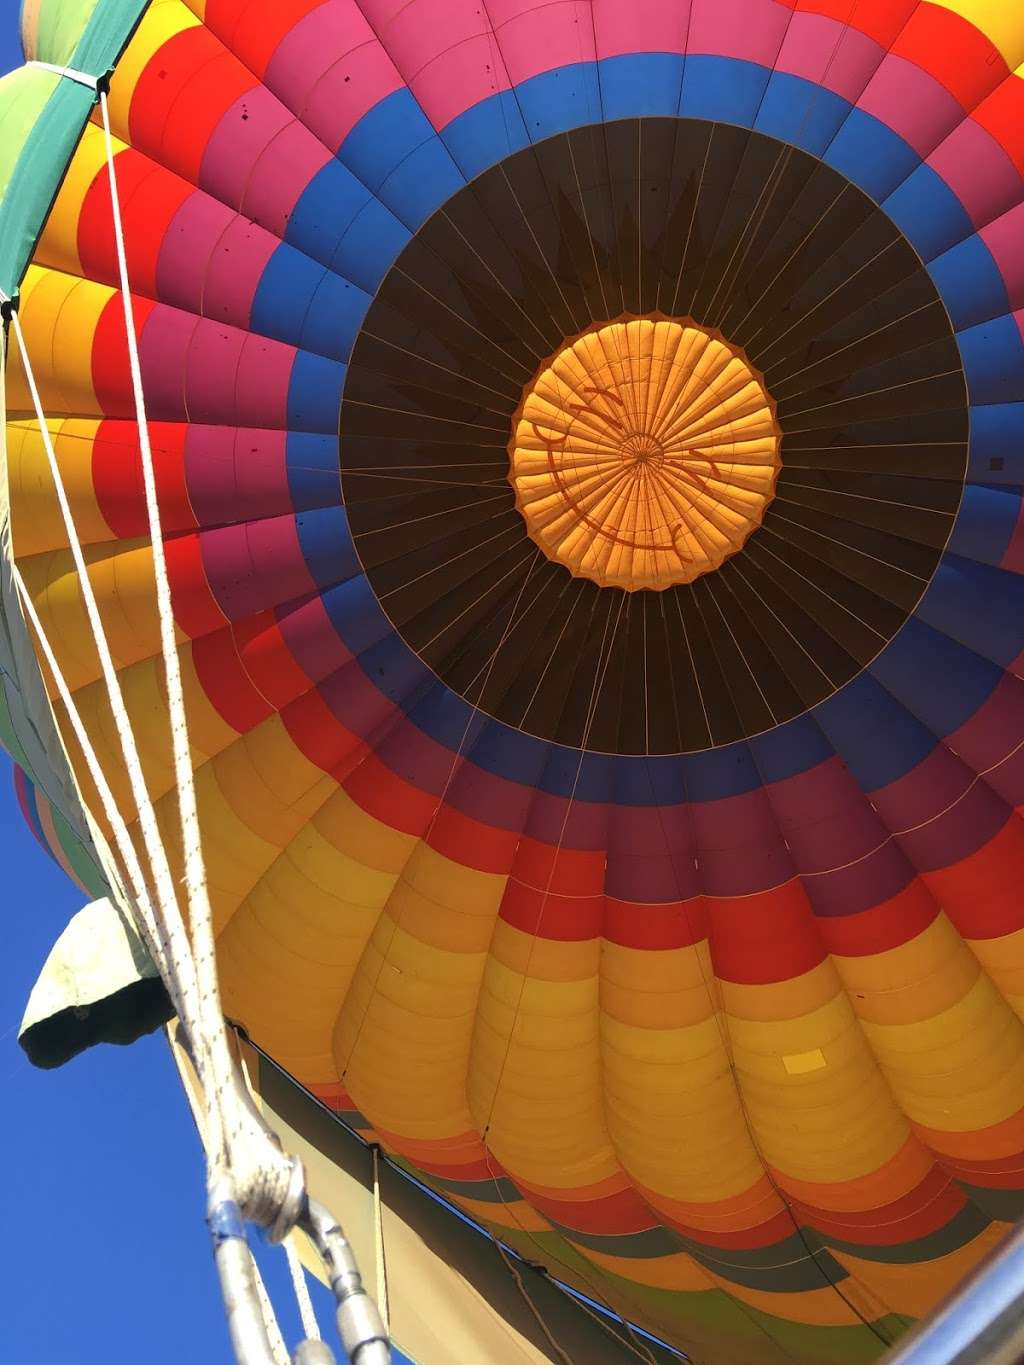 Magical Adventure Balloon Rides | 34843 Rancho California Rd, Temecula, CA 92591 | Phone: (866) 365-6987